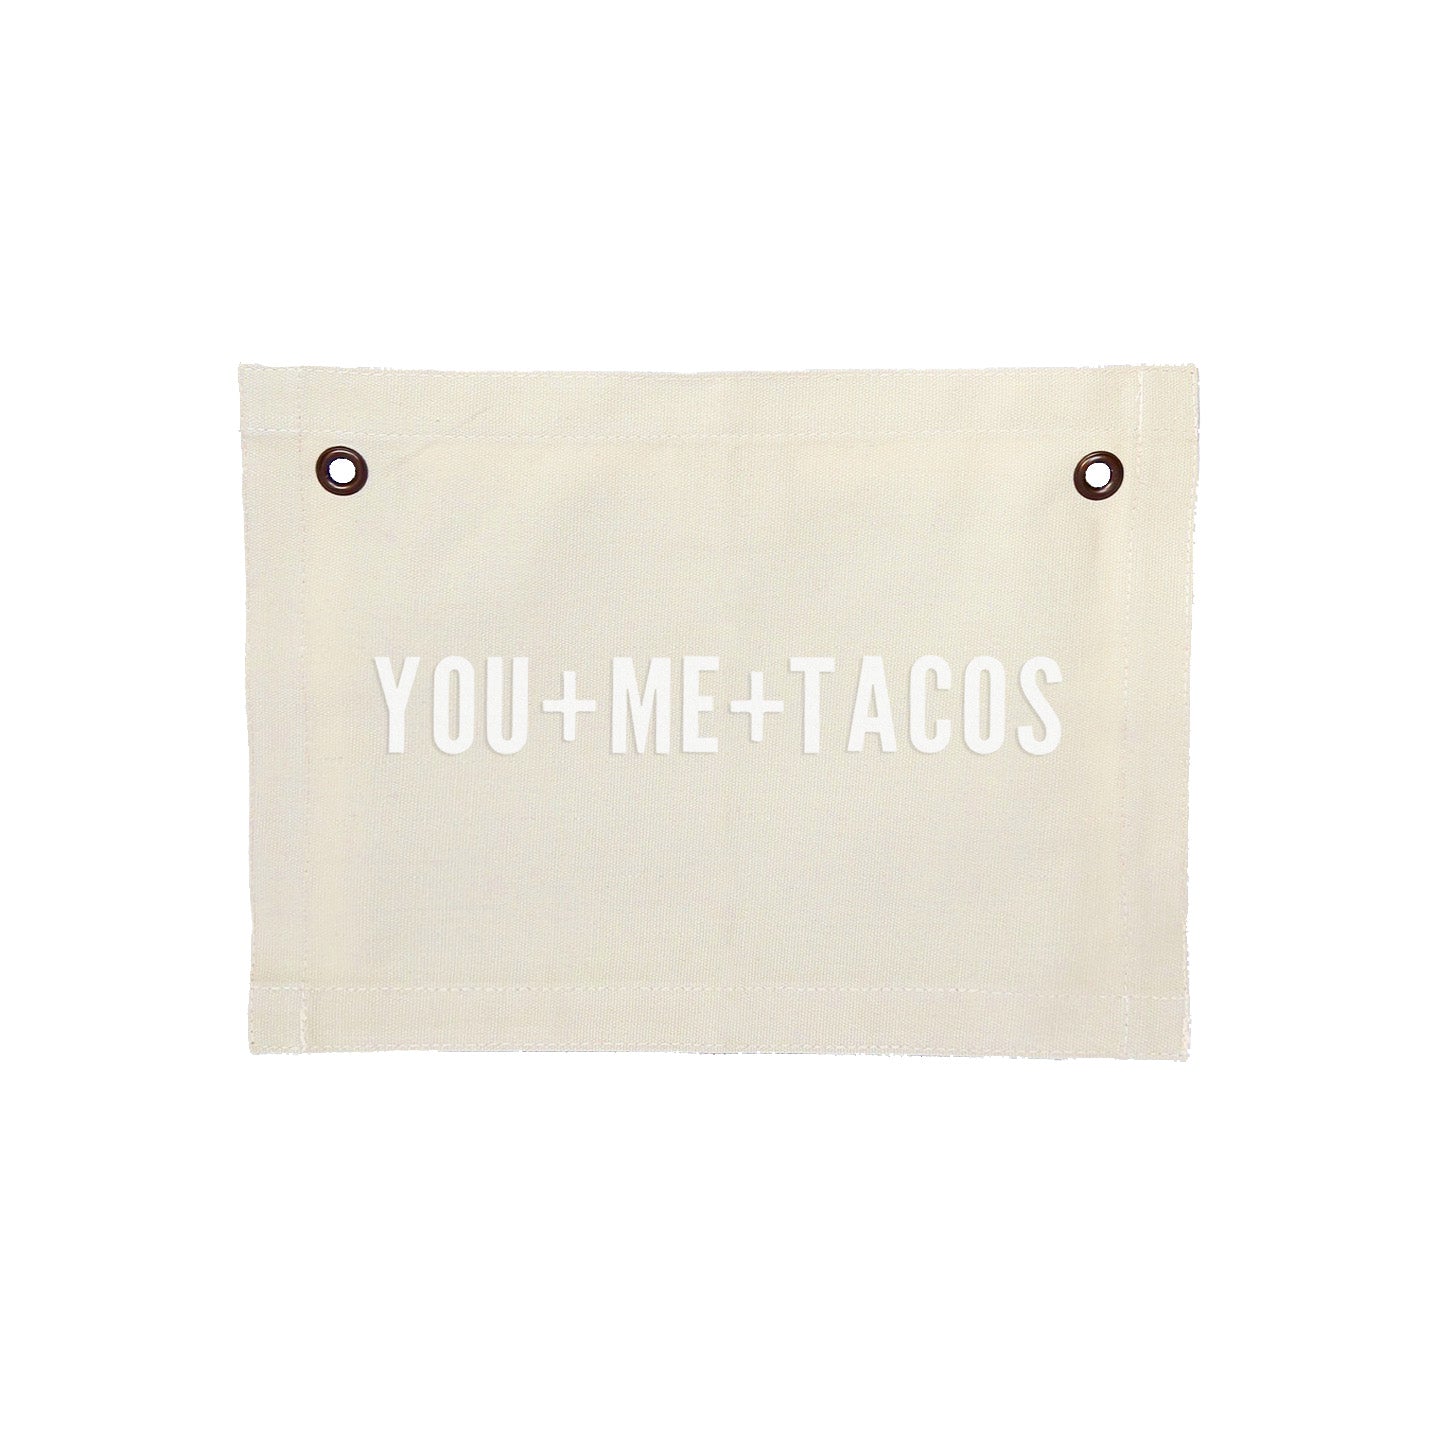 You+Me+Tacos Small Canvas Flag